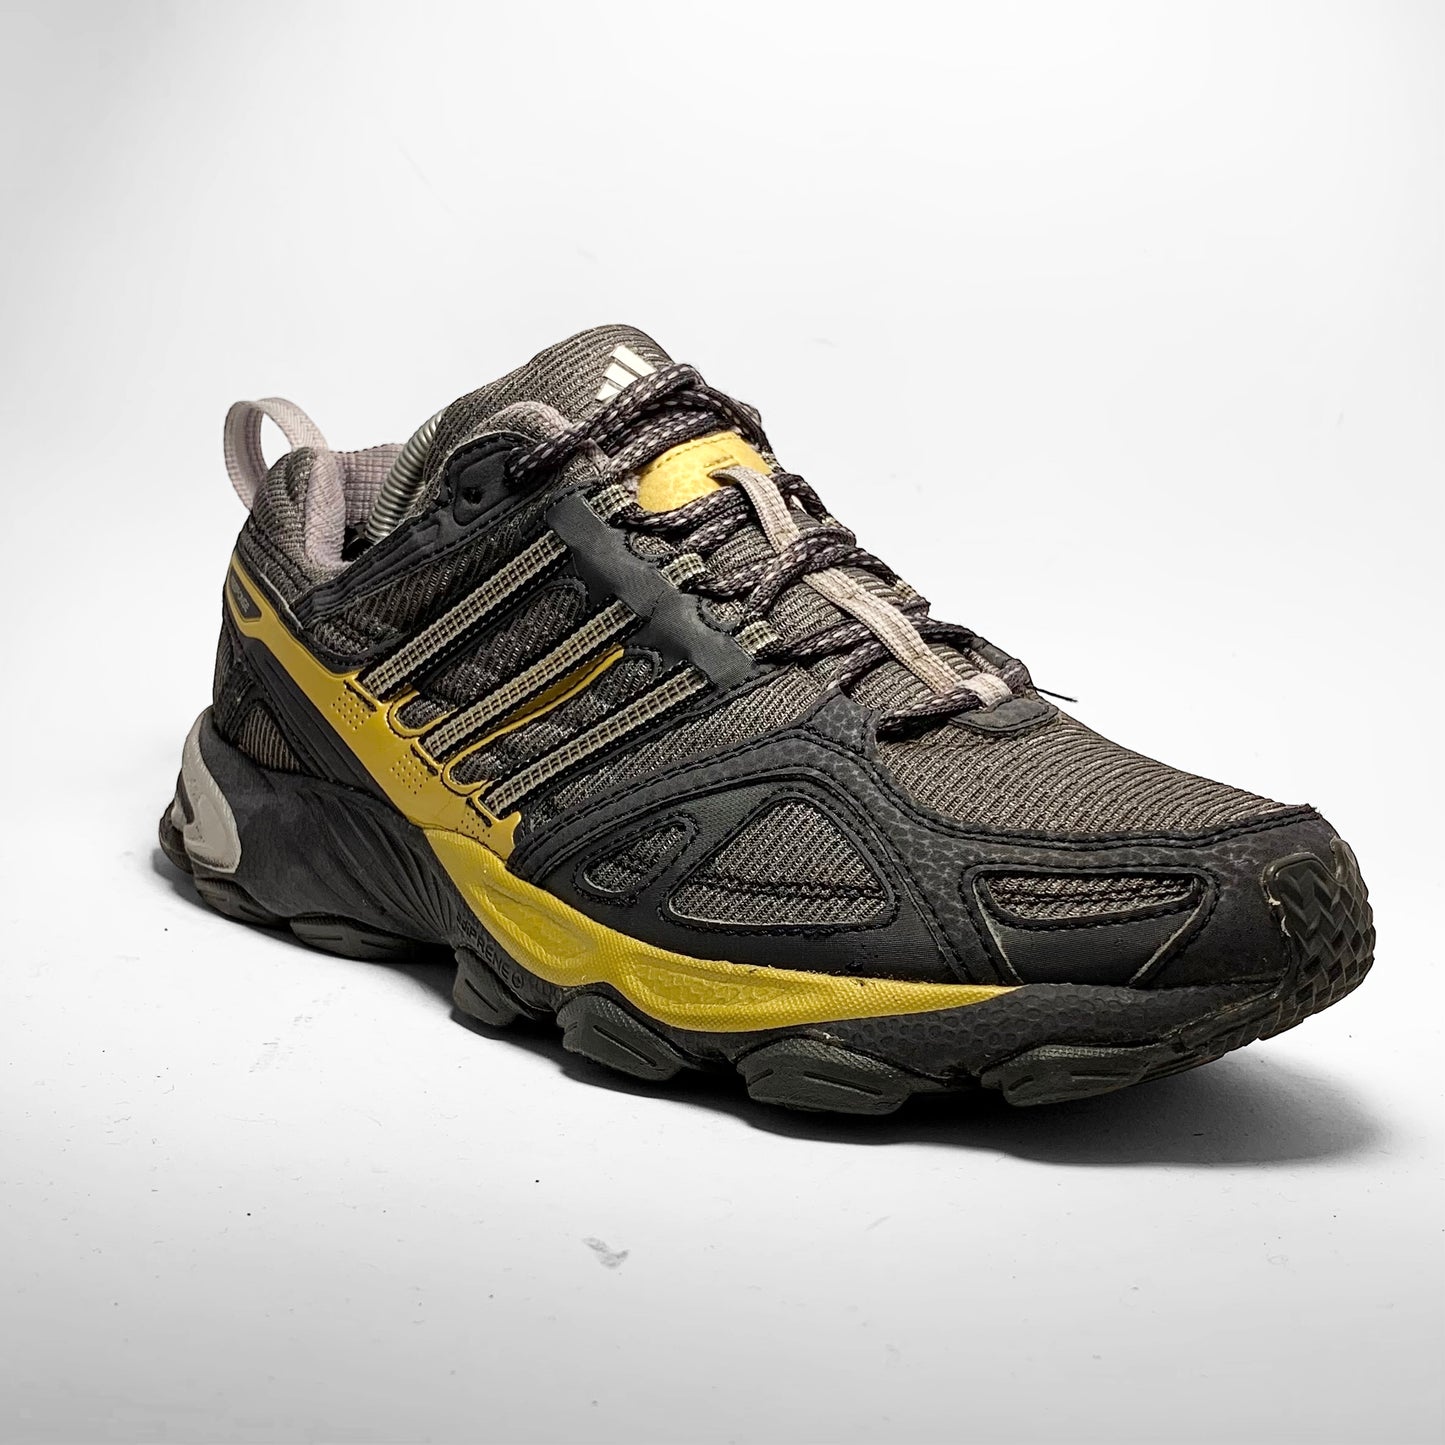 Adidas Trail Response GTX (2010)